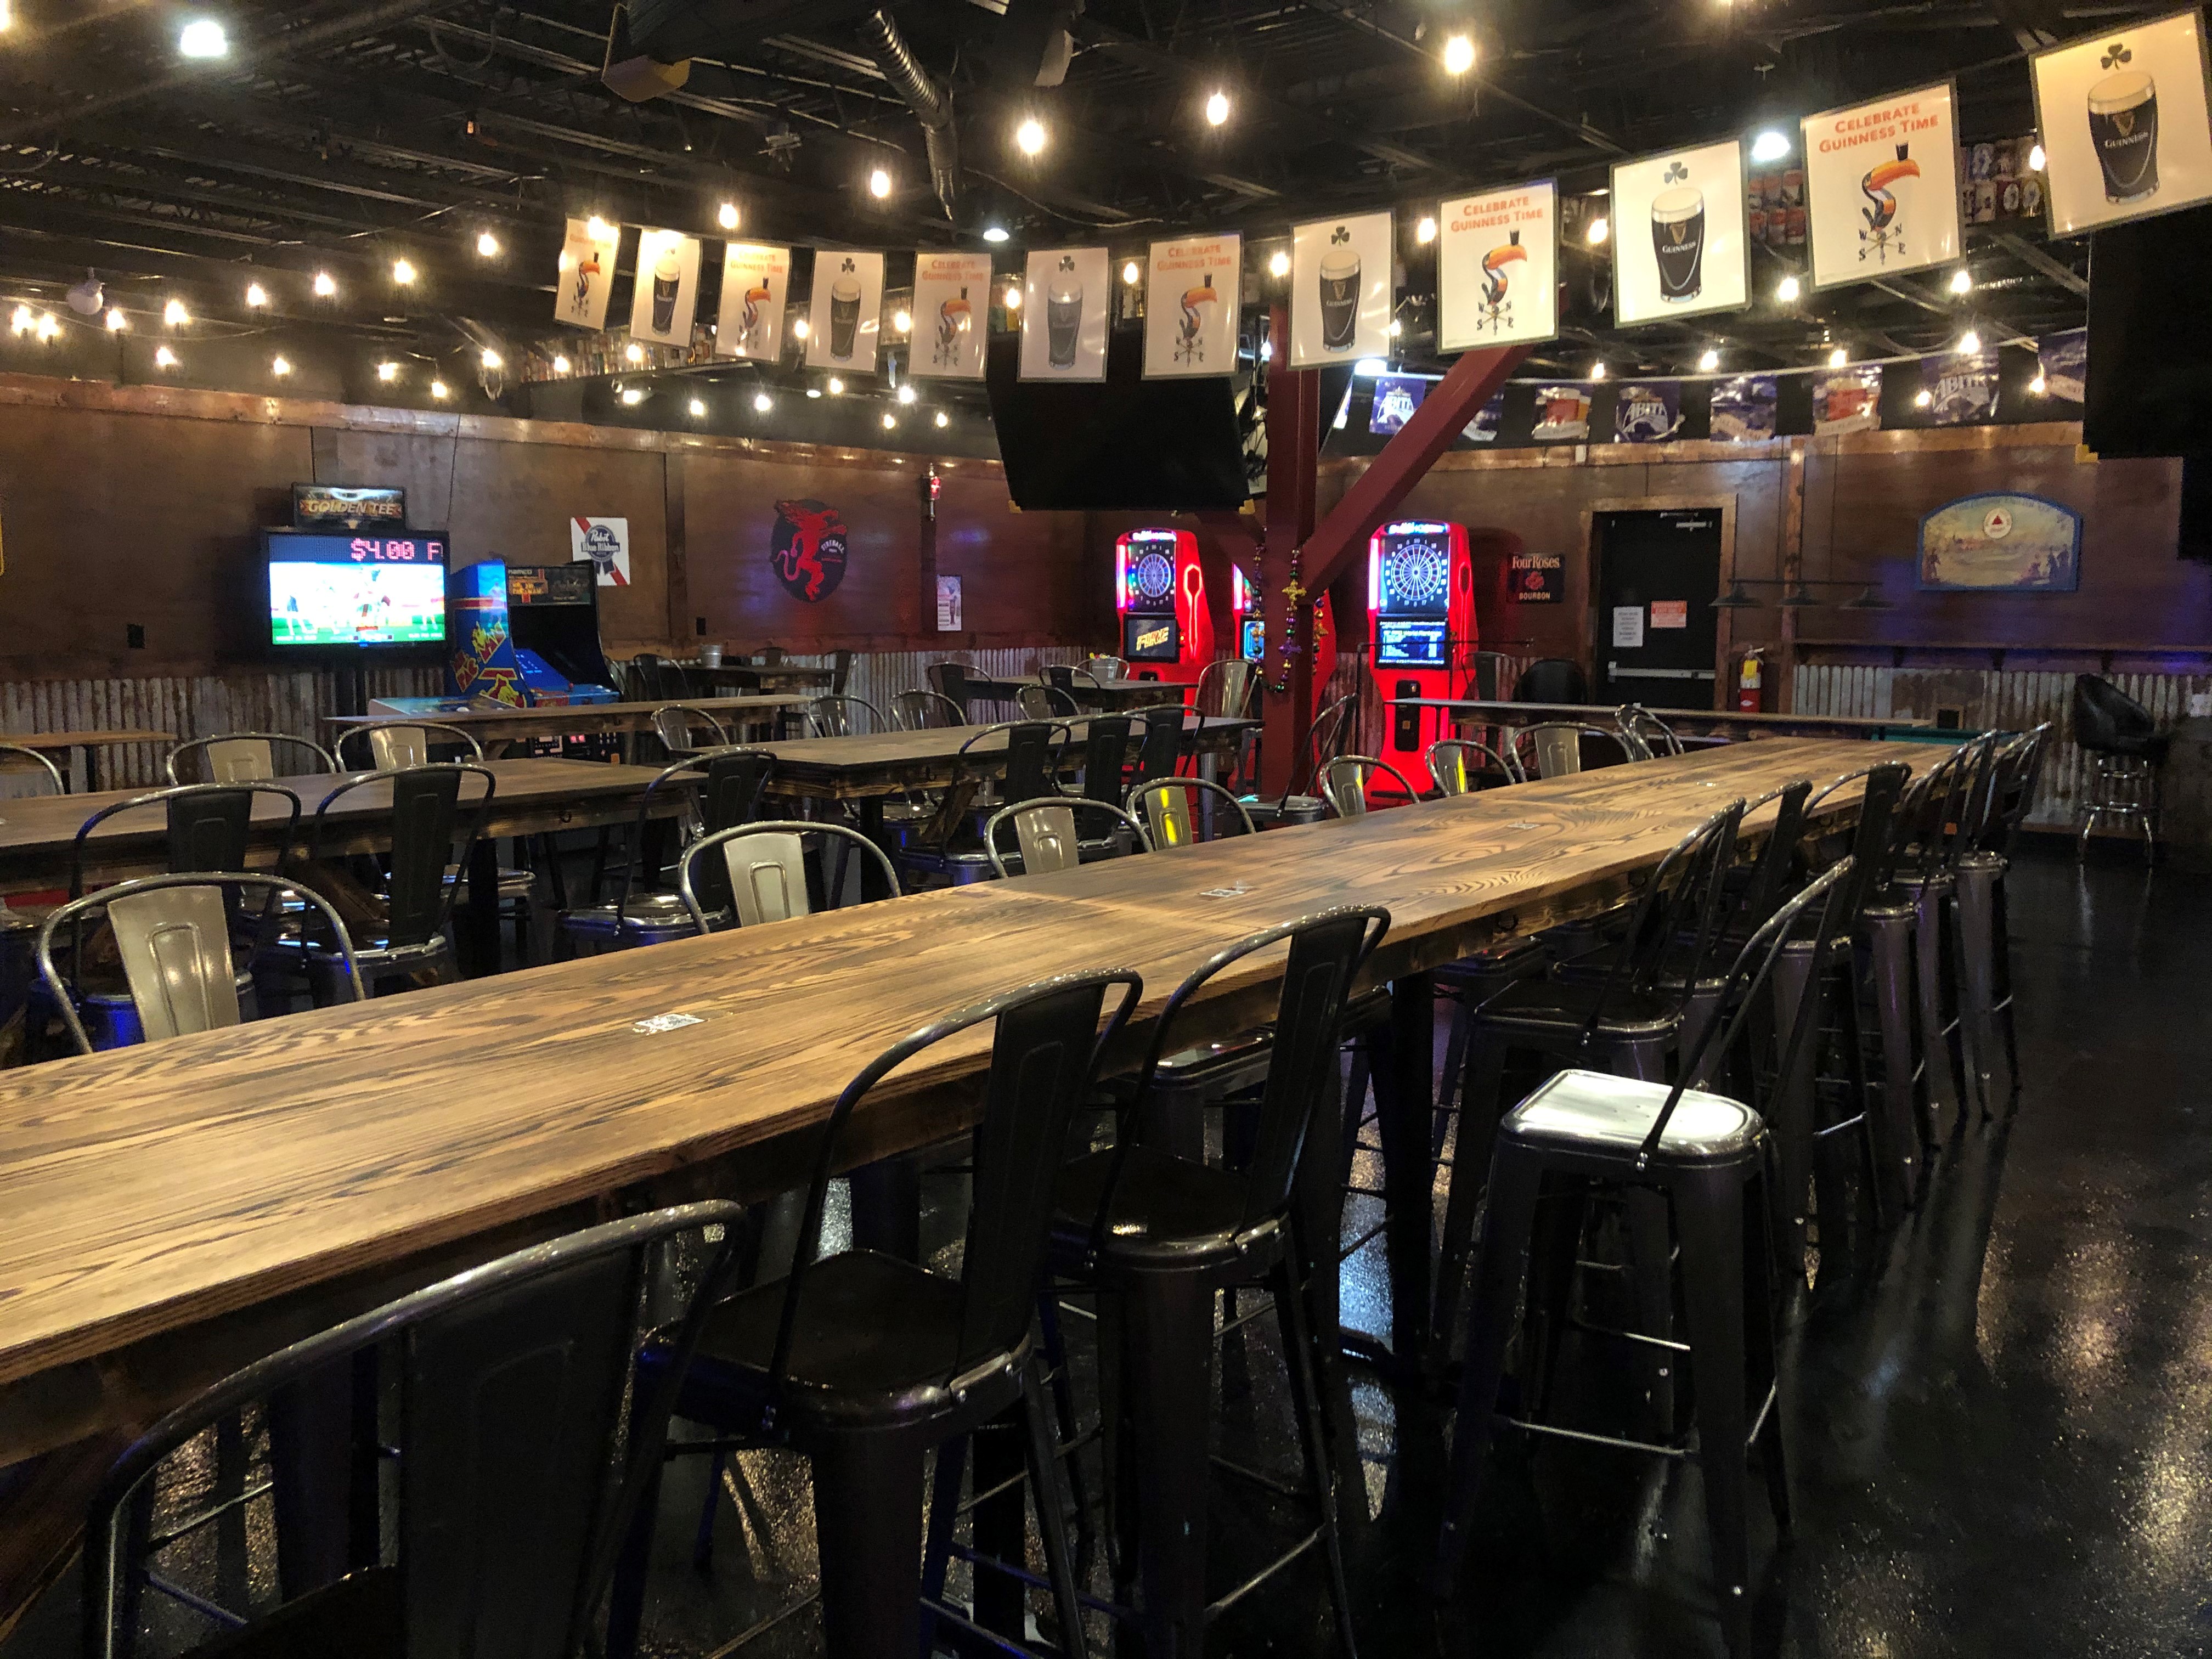 Atlanta restaurant review: The Po'boy Shop in Decatur